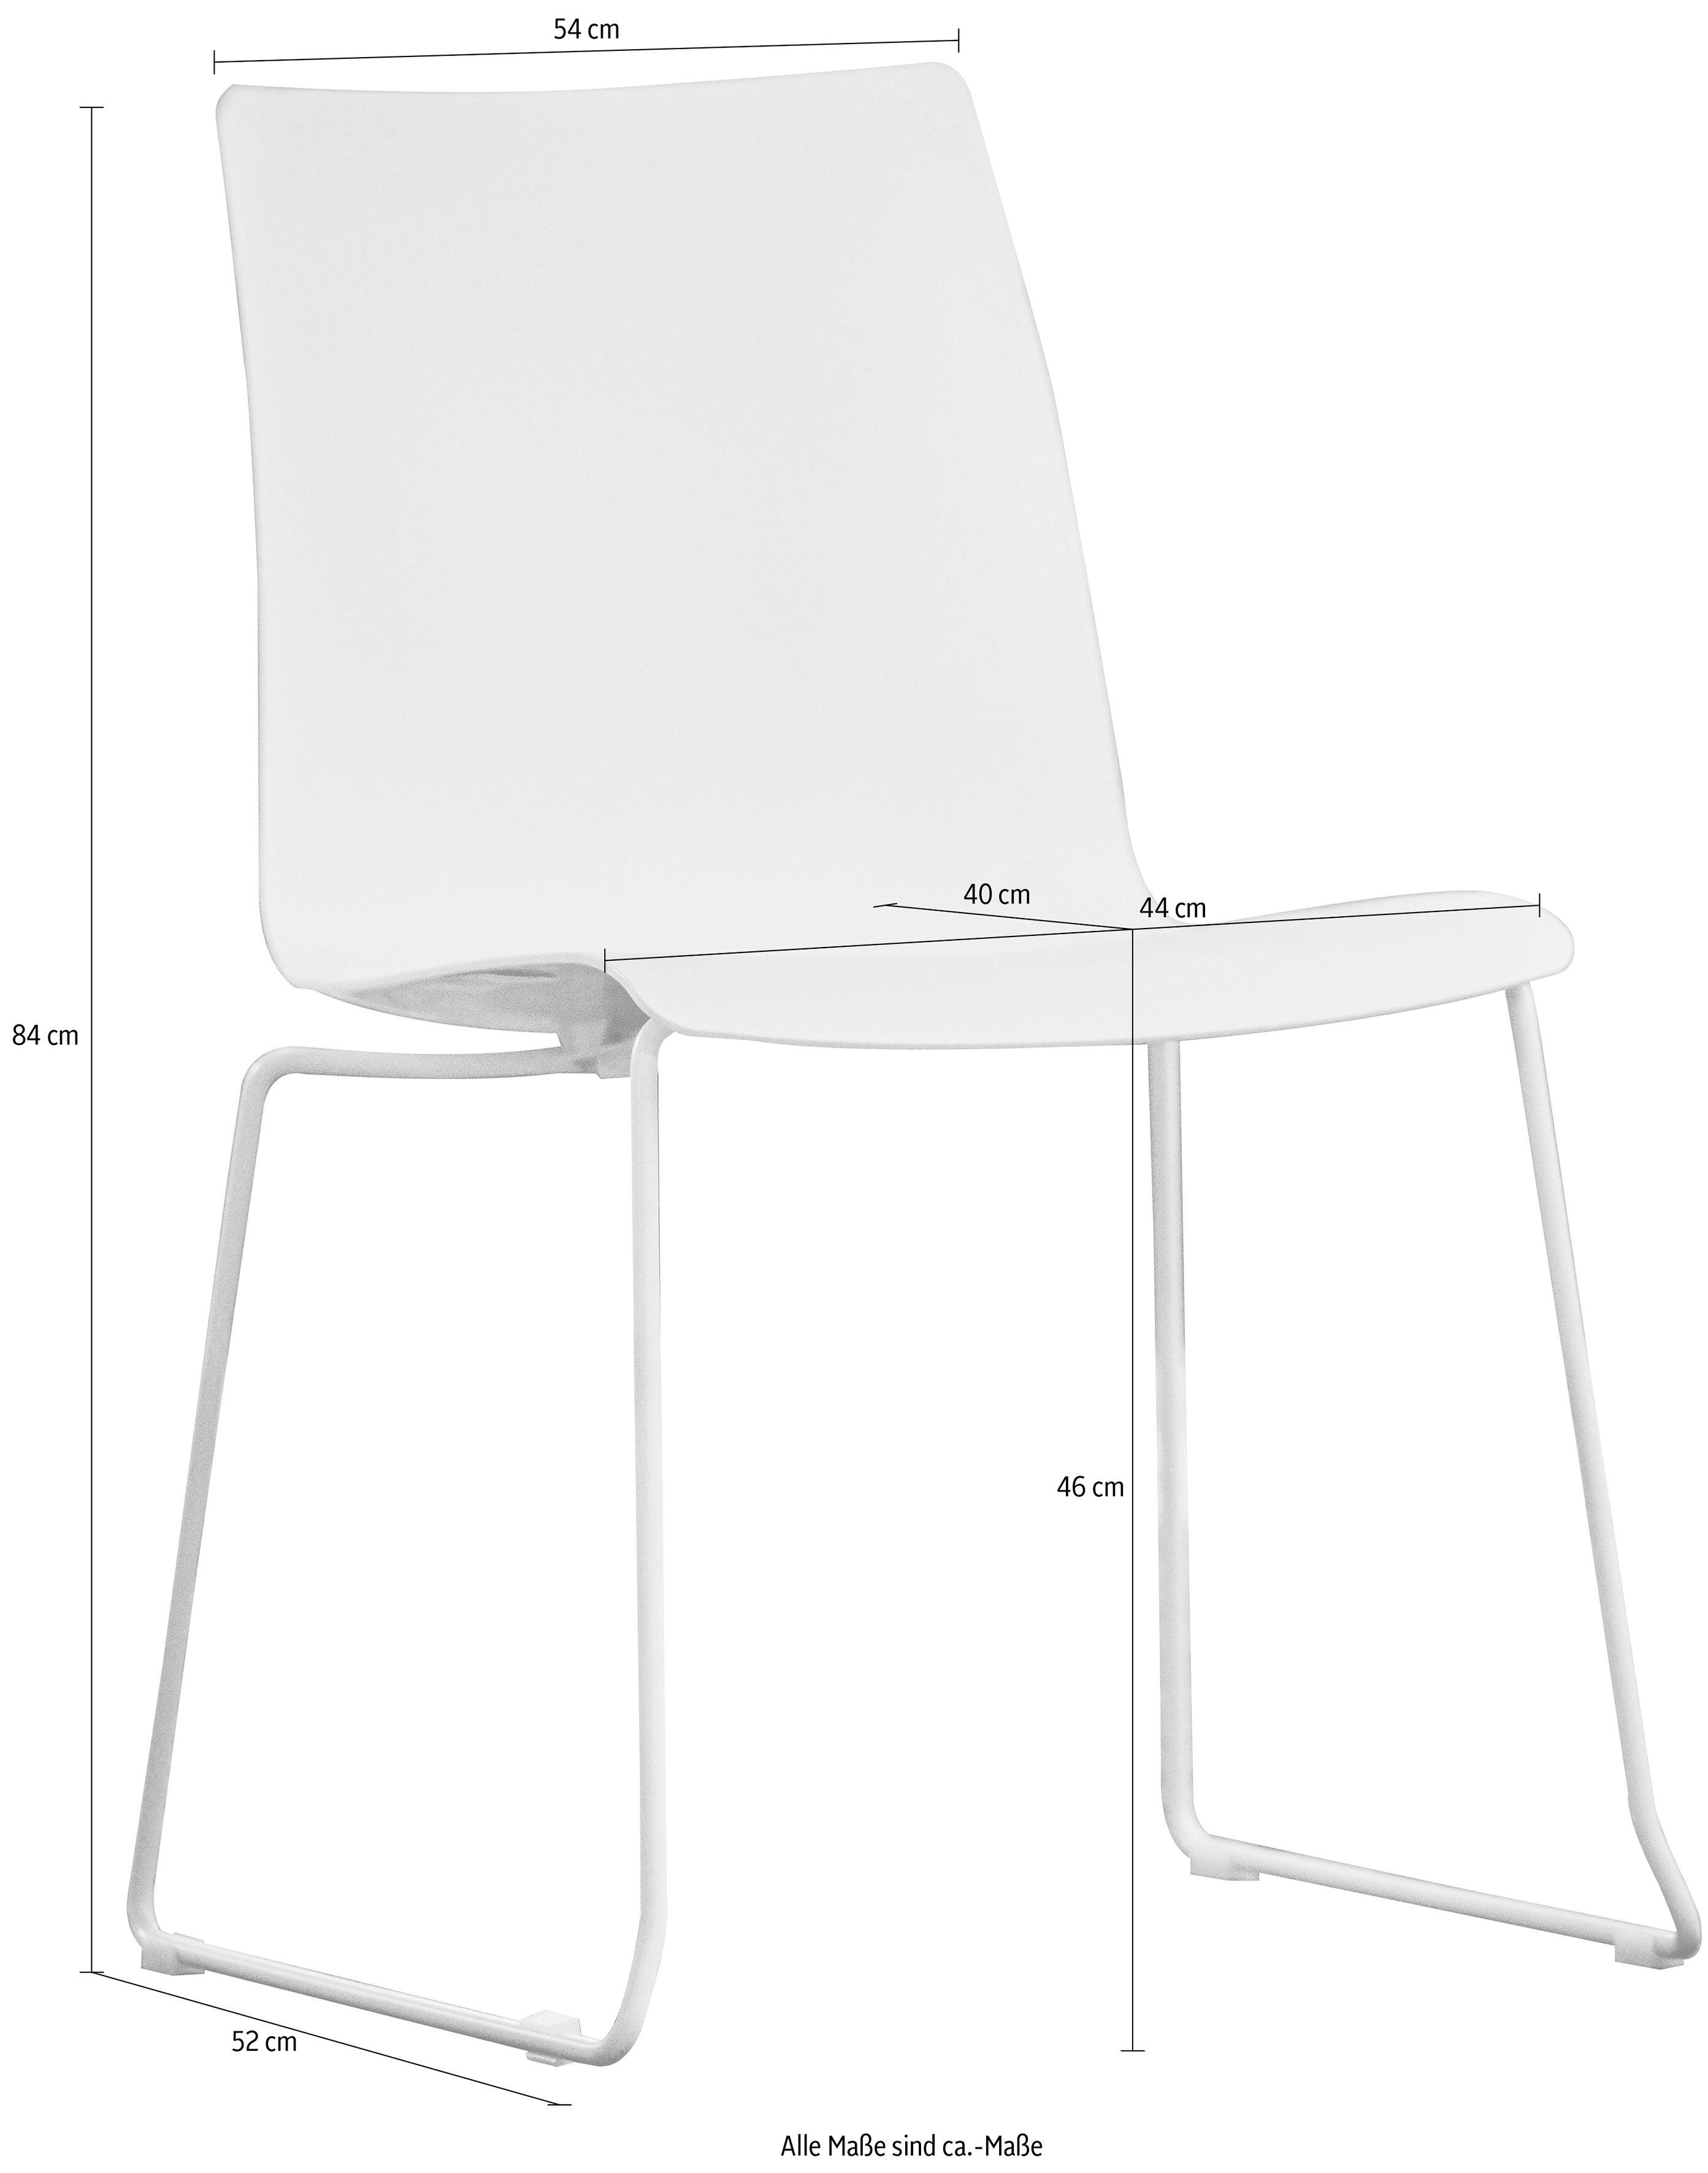 jankurtz Stuhl in Farben Sitzschale slide, stapelbar, Kunsstoff, 3 aus